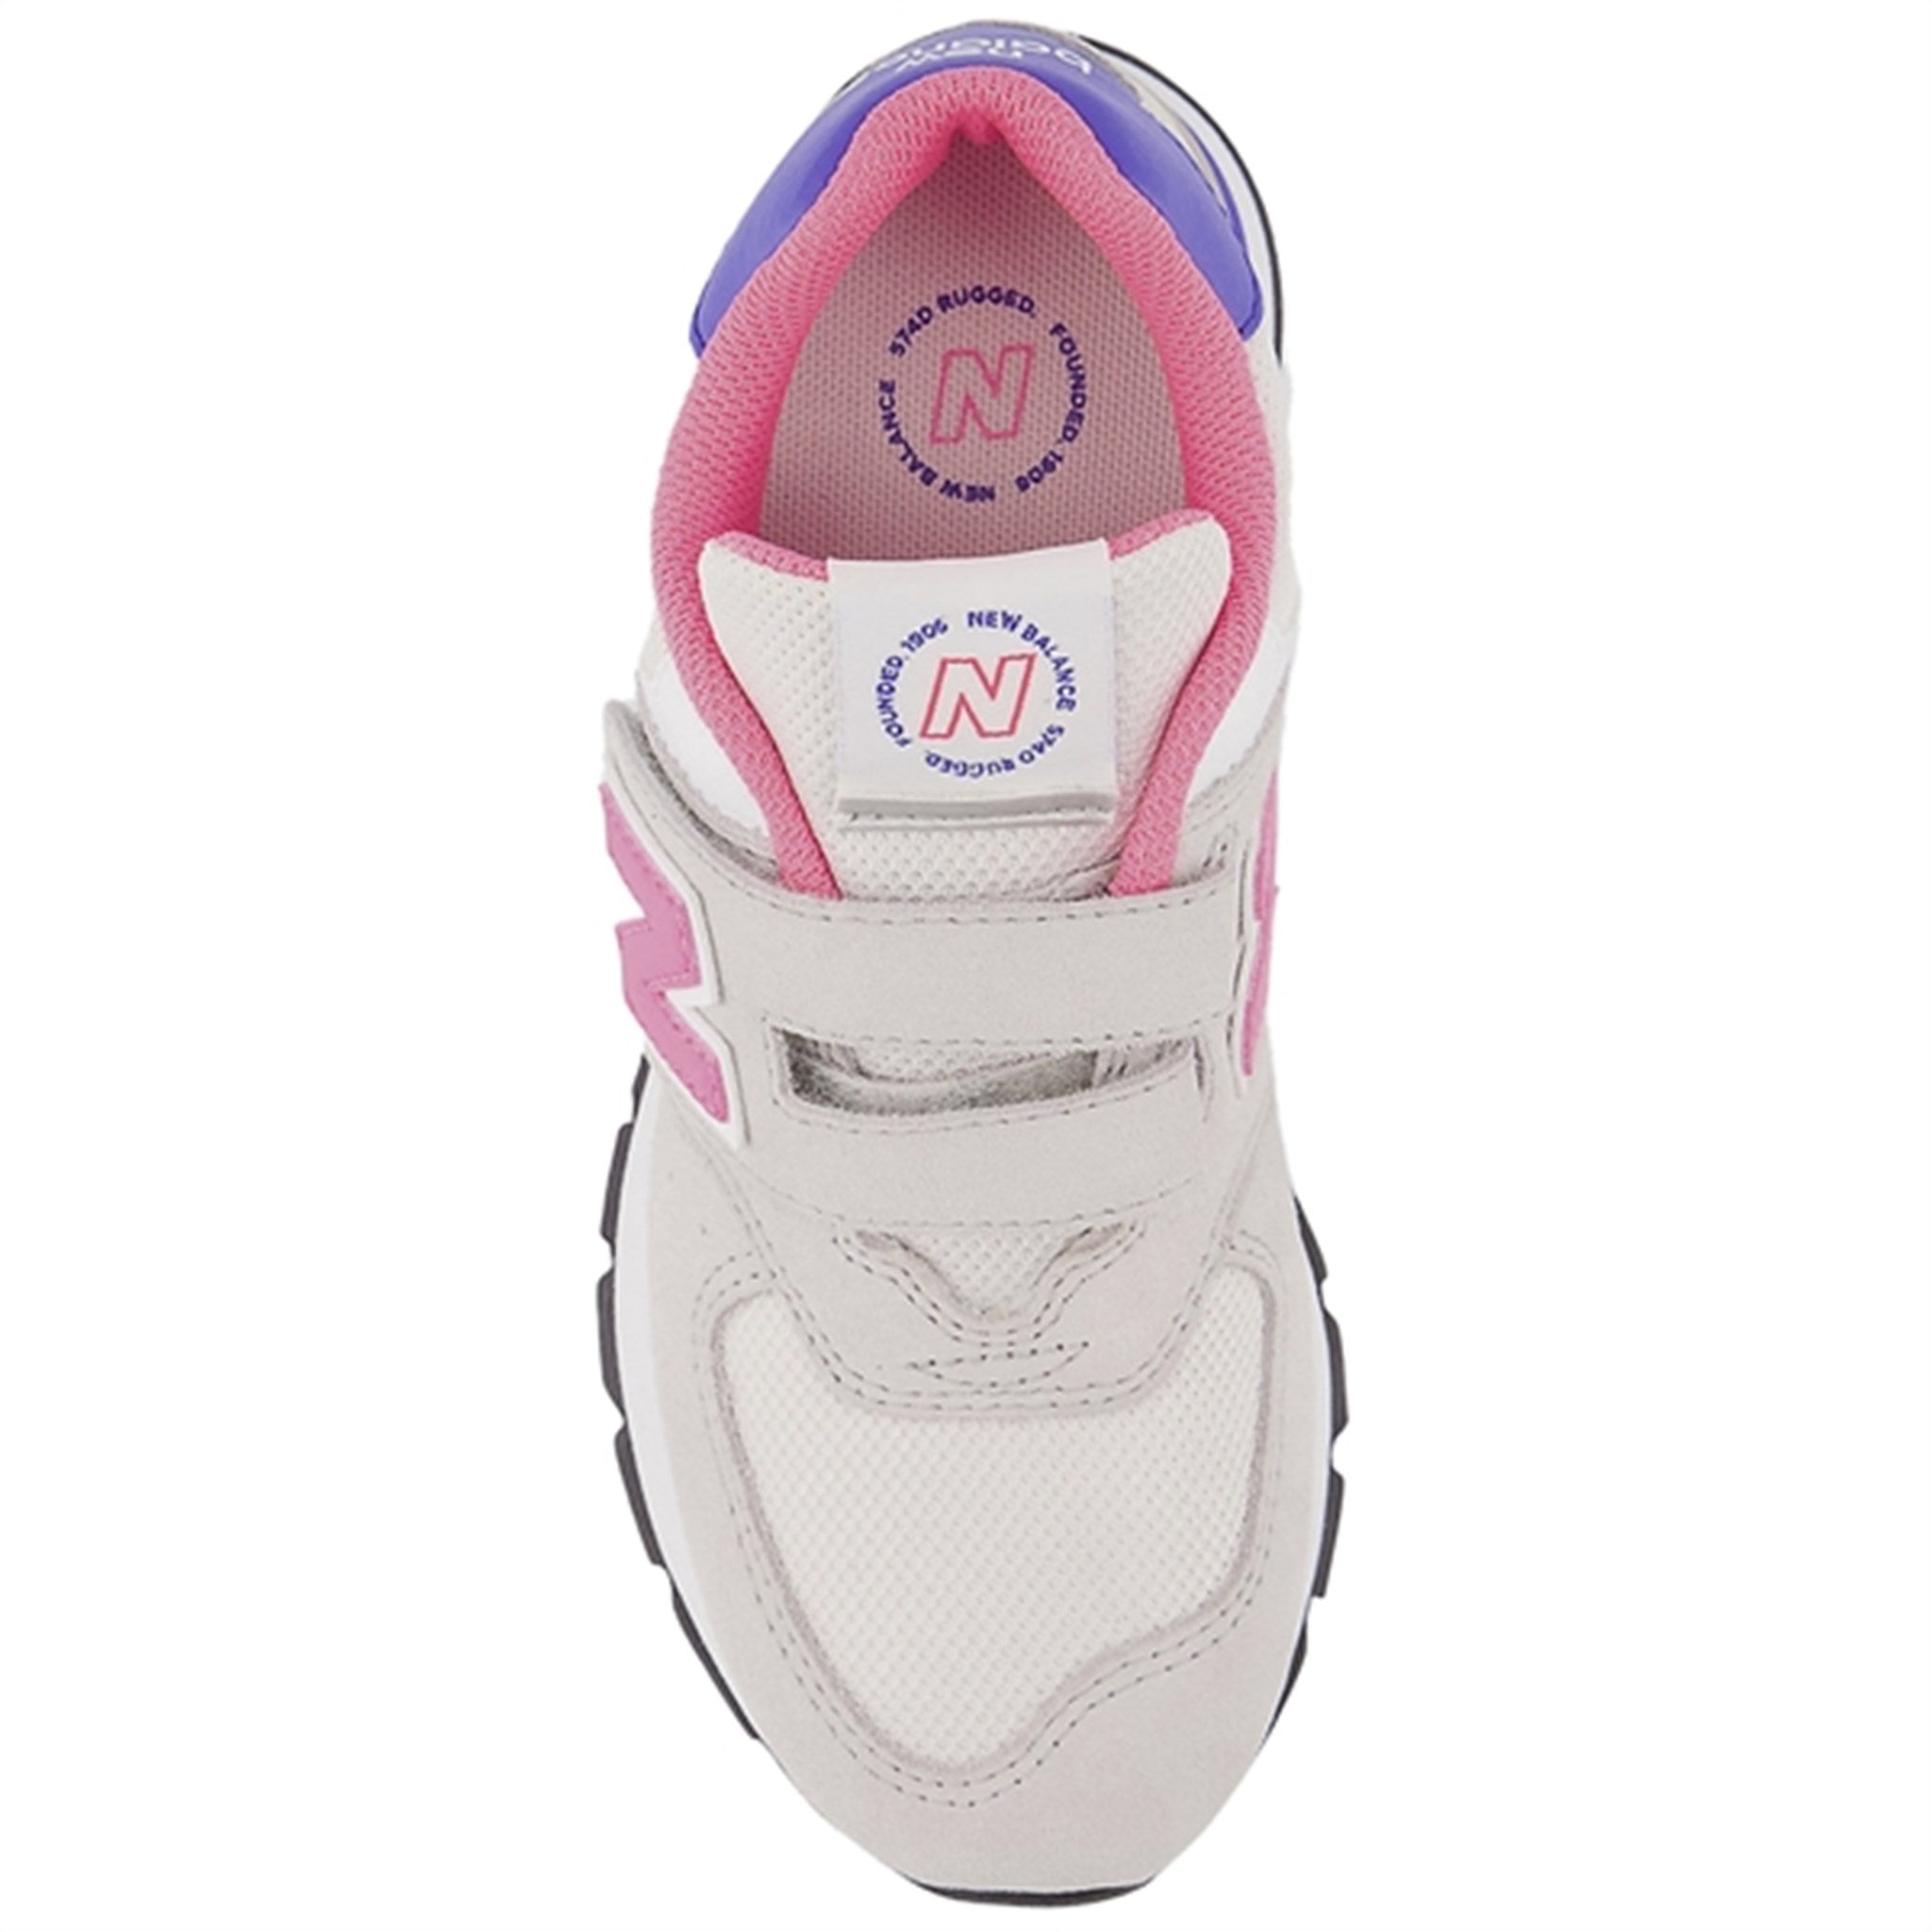 New Balance 574 Summer Fog/Neon Pink Sneakers 4